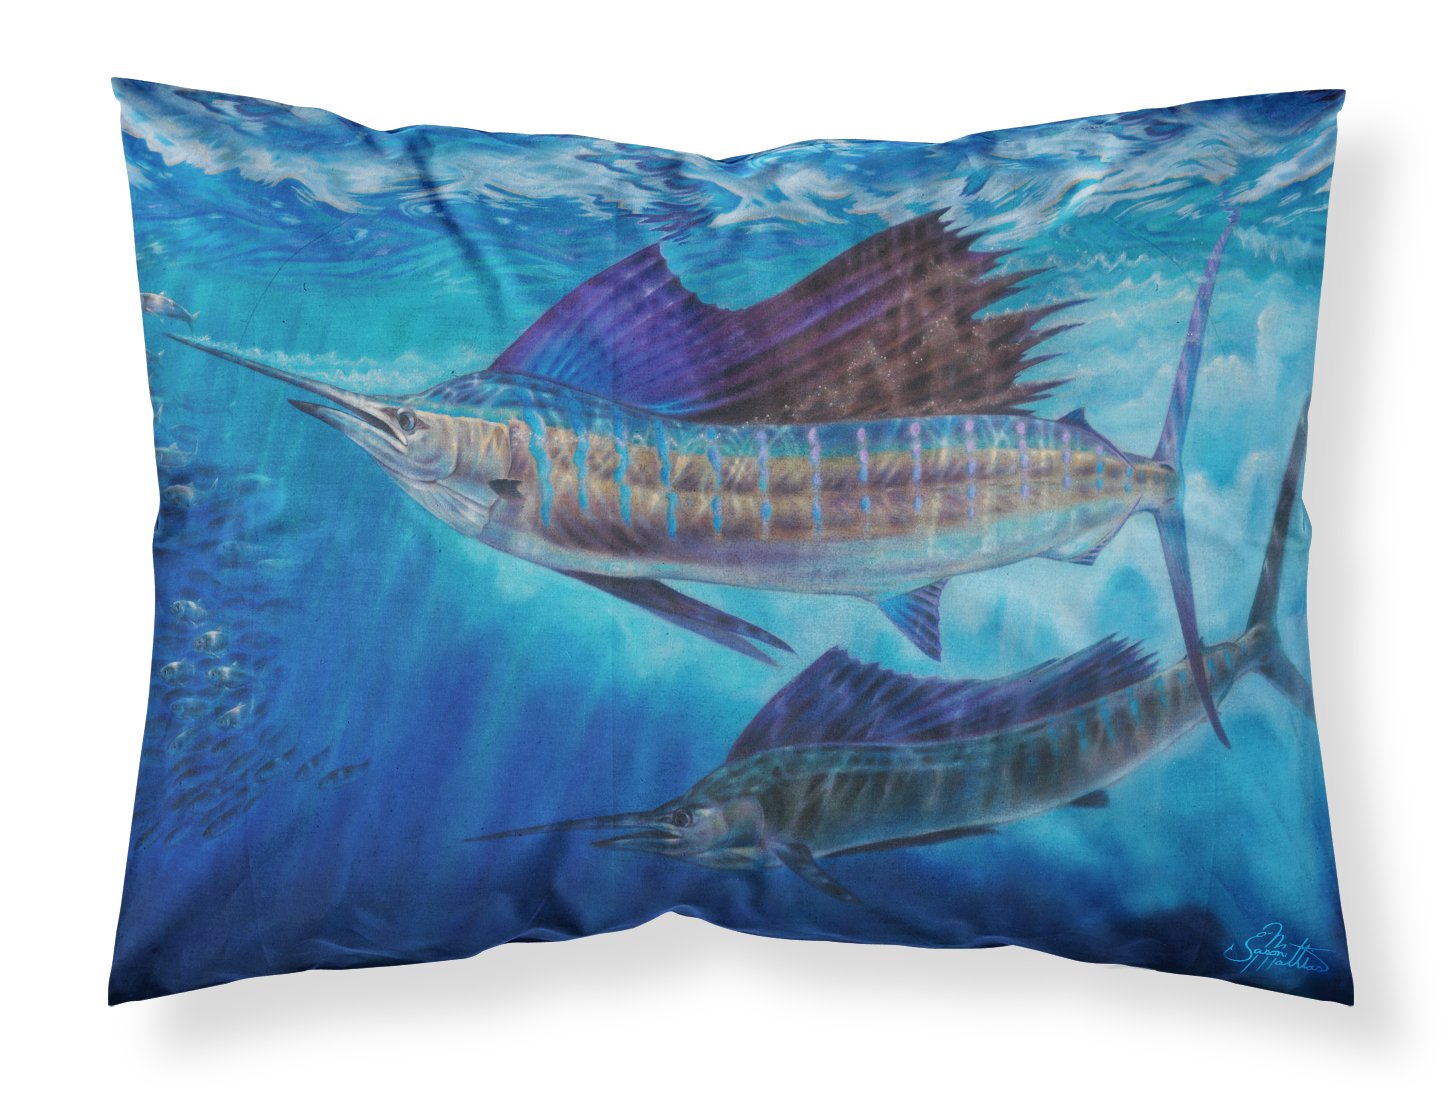 Wide Open Sailfish Fabric Standard Pillowcase JMA2011PILLOWCASE by Caroline's Treasures